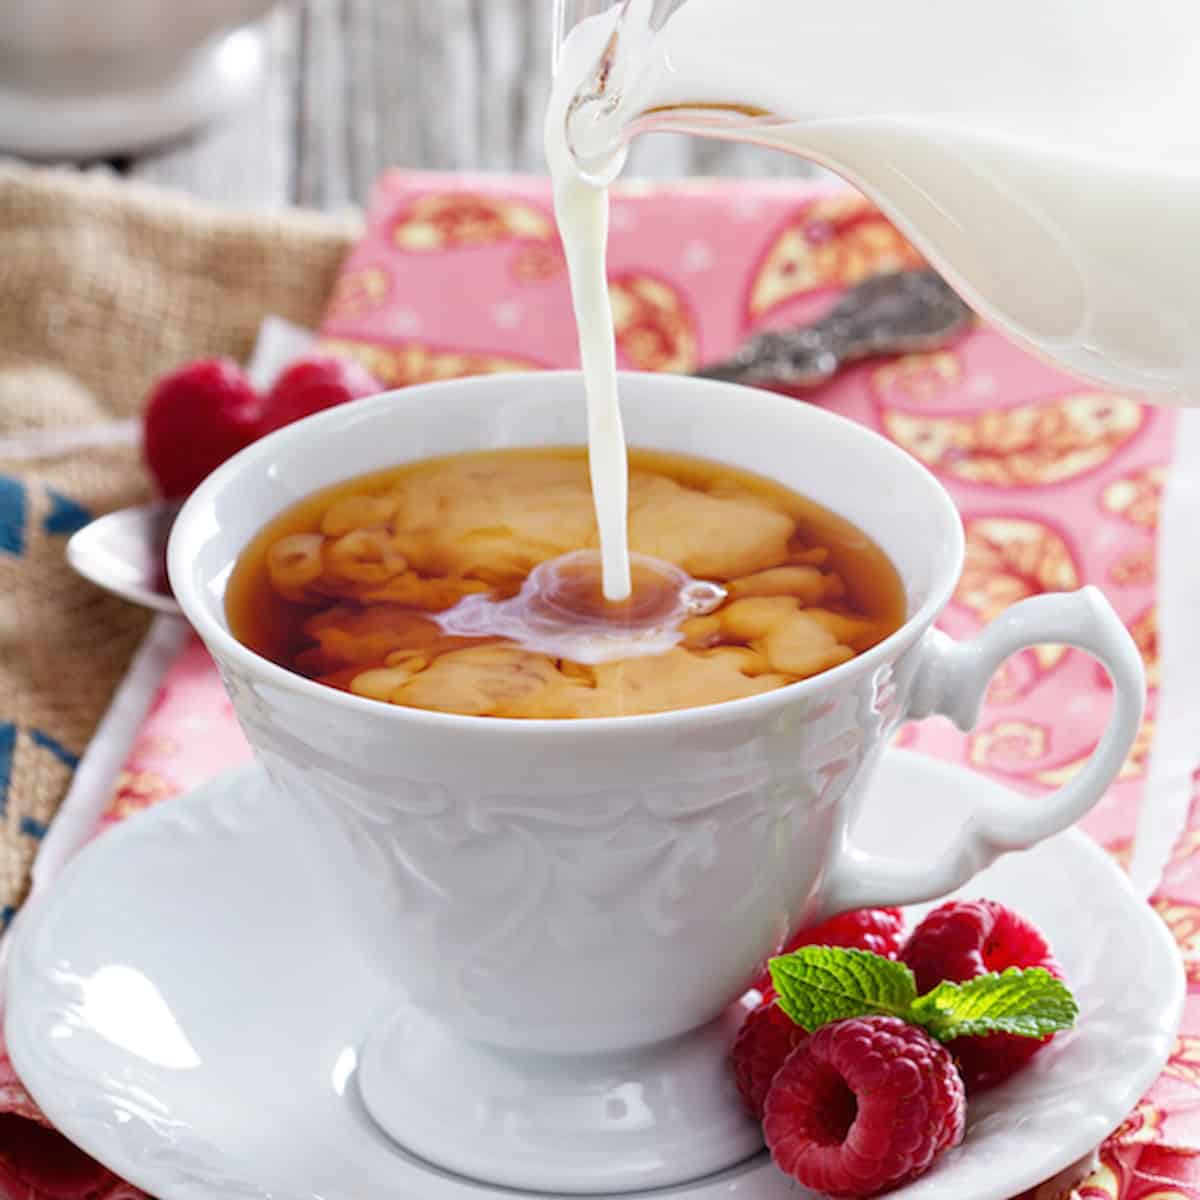 English breakfast tea with milk